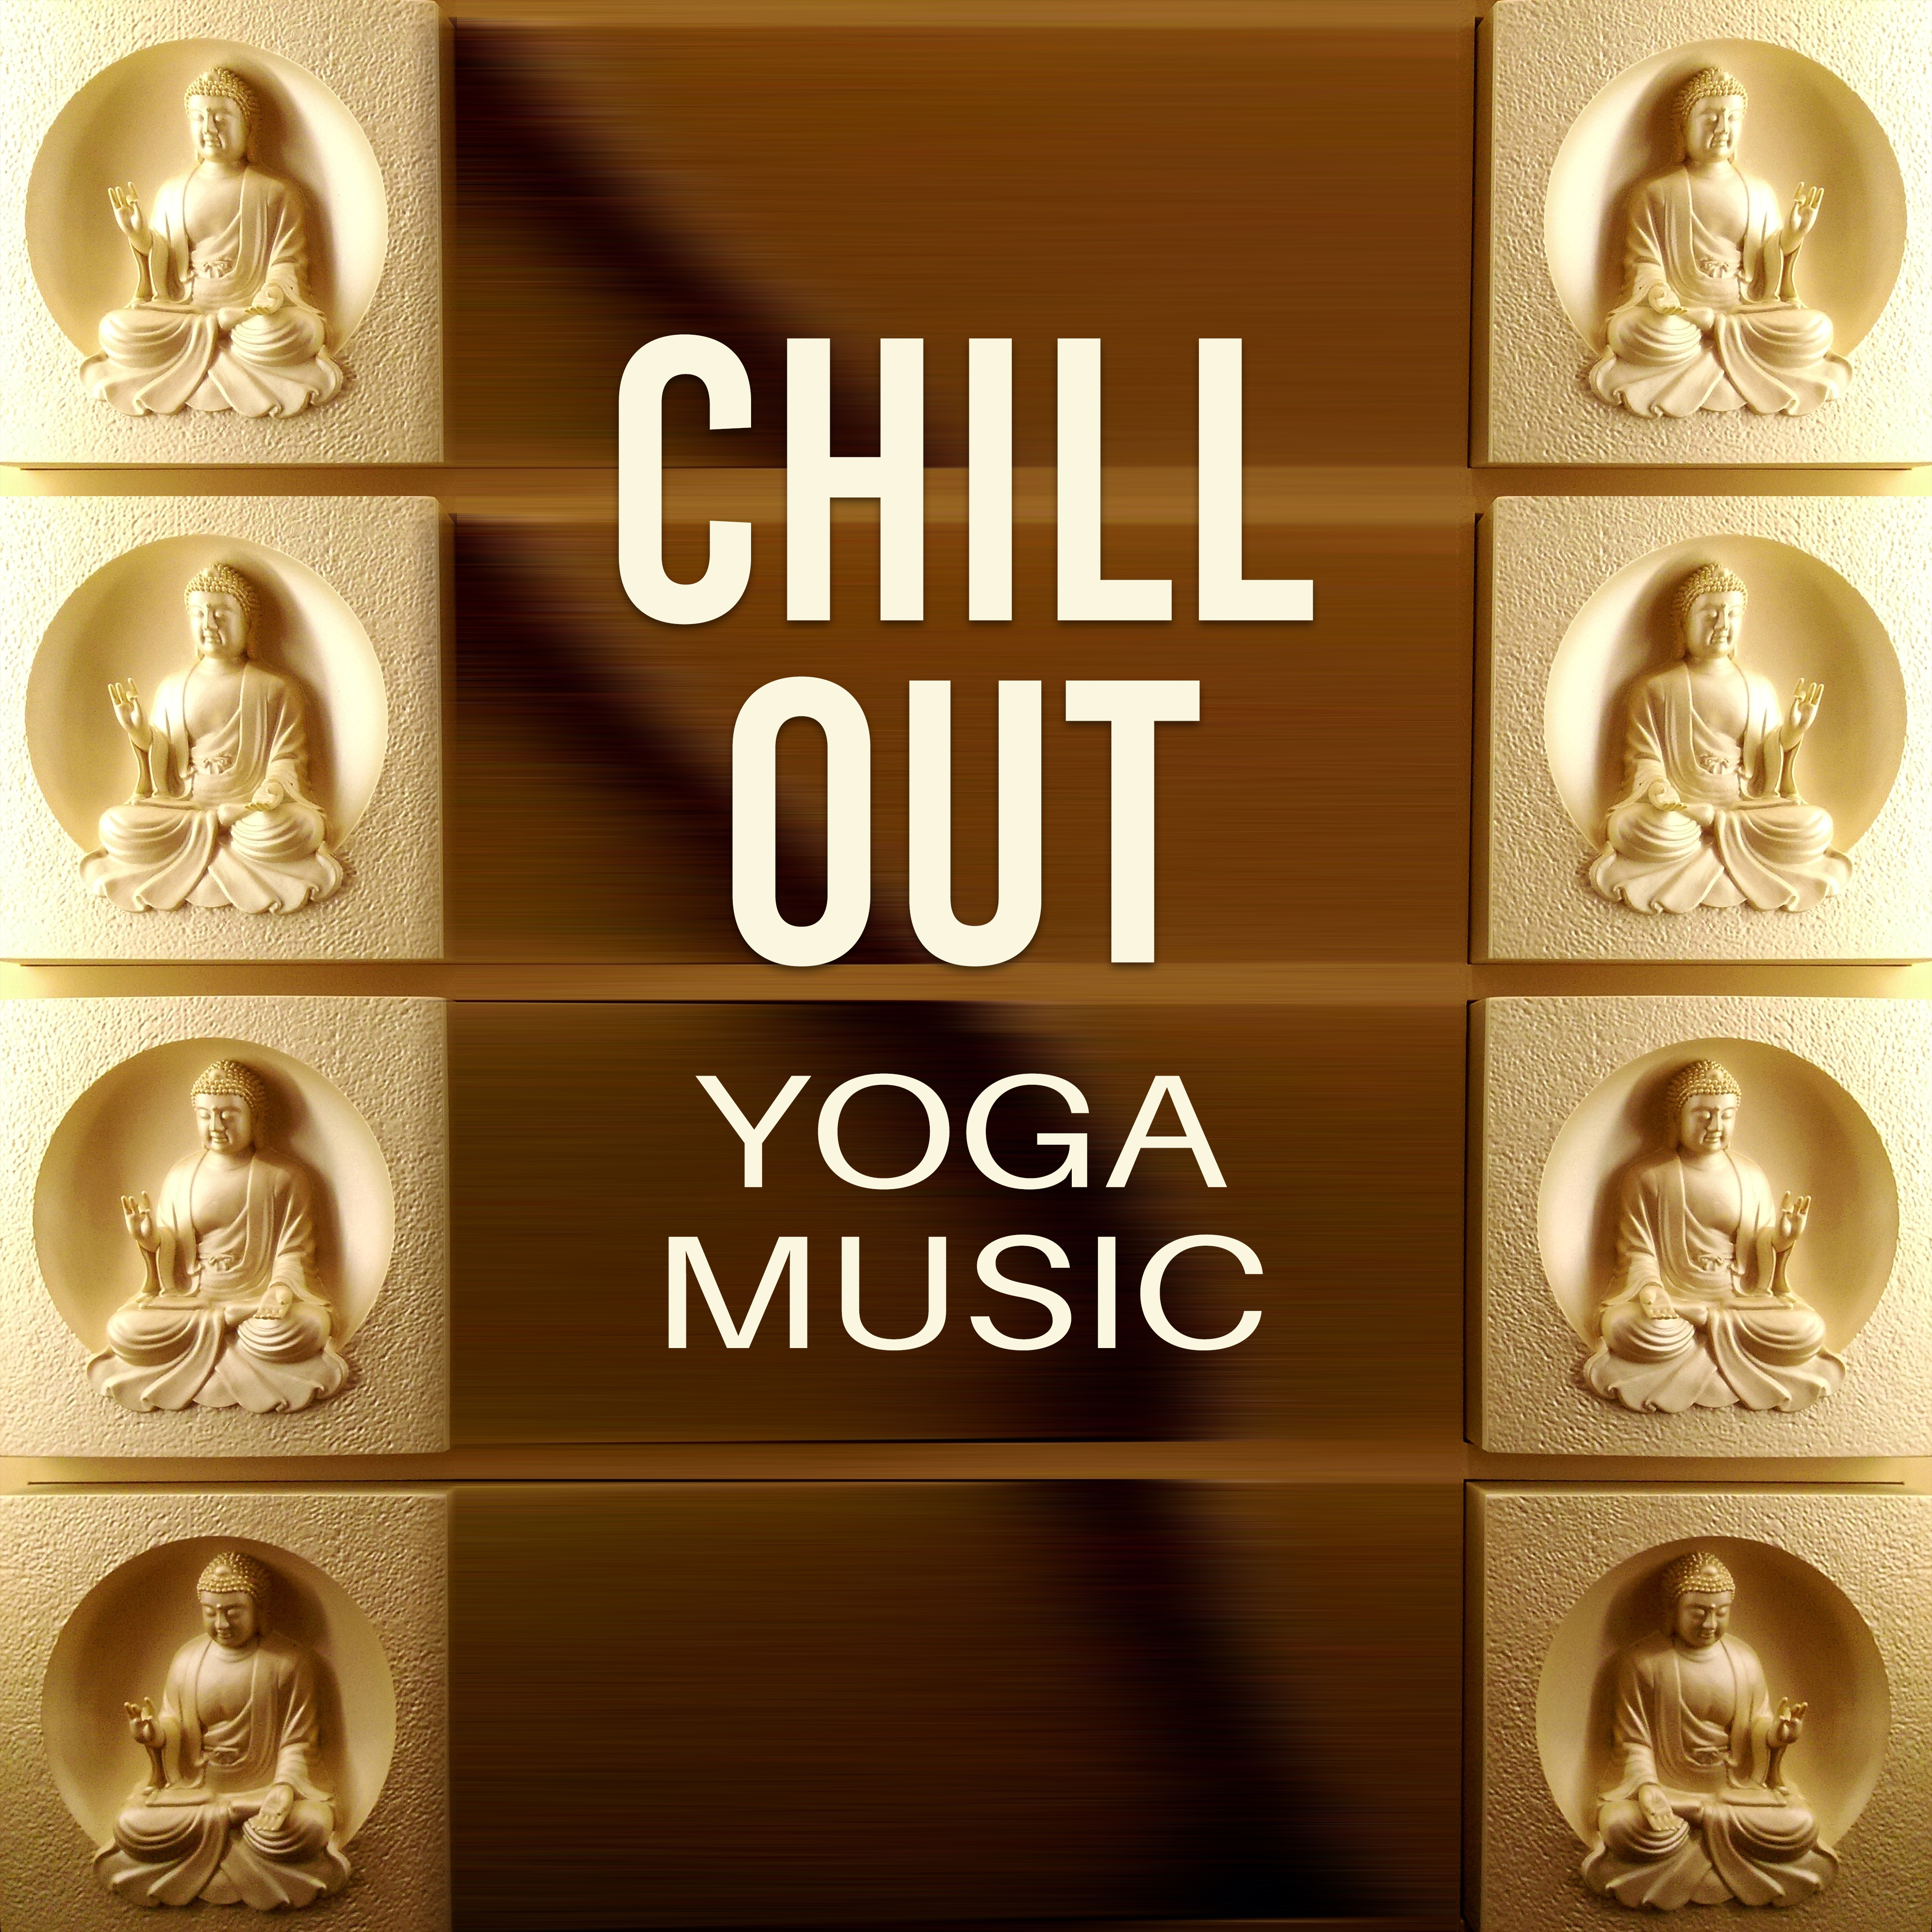 Chill Out Yoga Music  Oriental Music for Deep Meditation, Chill Out 2017, Chakra Balancing, Training Yoga, Tibetan Chill Out, Buddha Lounge